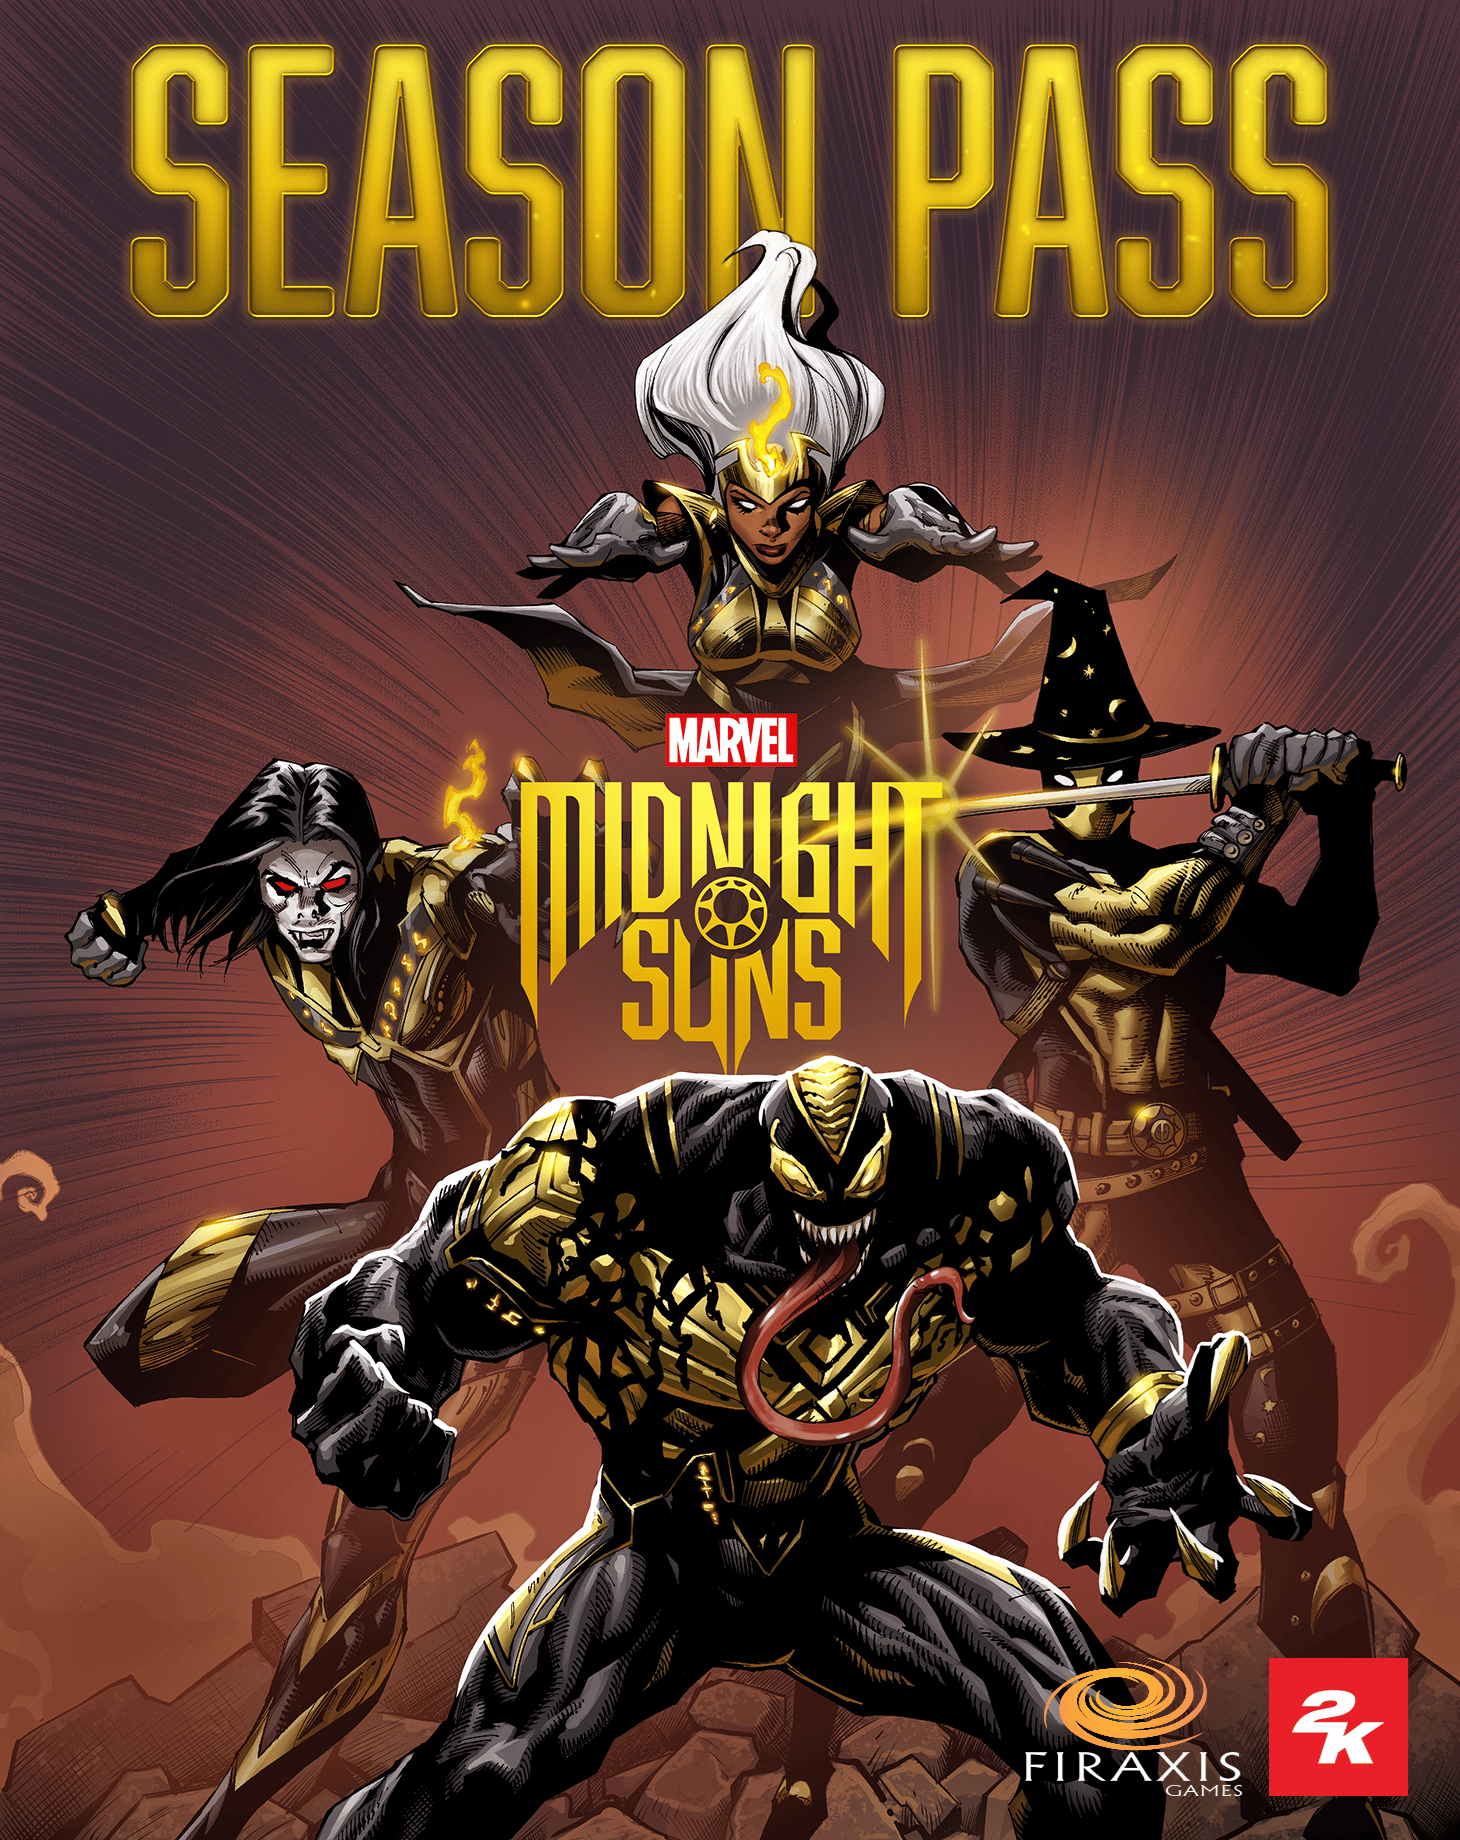 Marvel's Midnight Suns Season Pass | TK (3ded20d9-8d64-427c-842c-89eb6cb0d561)